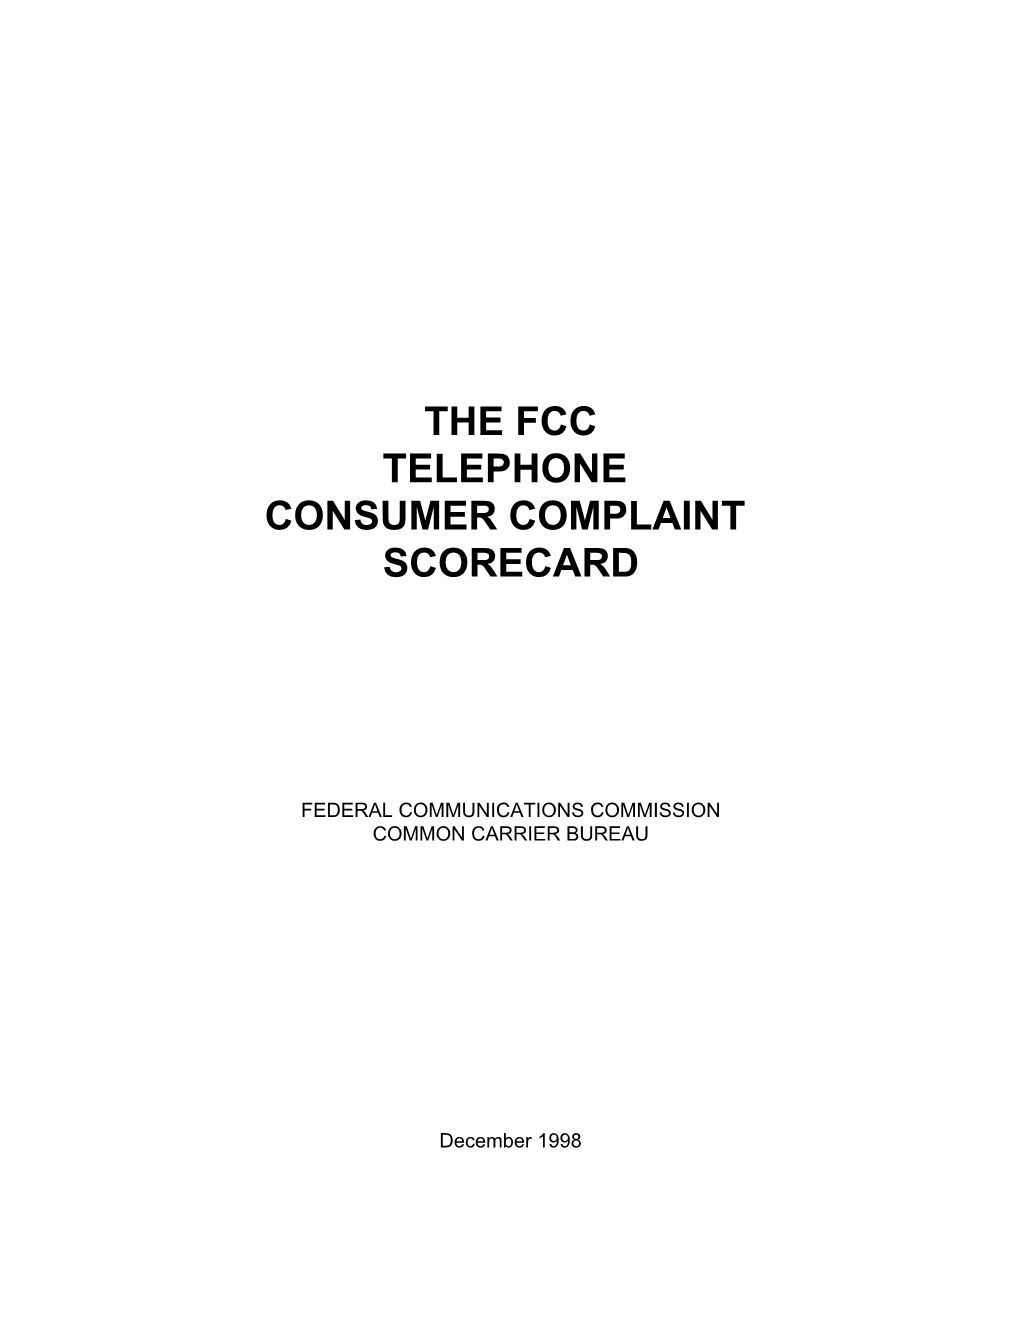 The Fcc Telephone Consumer Complaint Scorecard